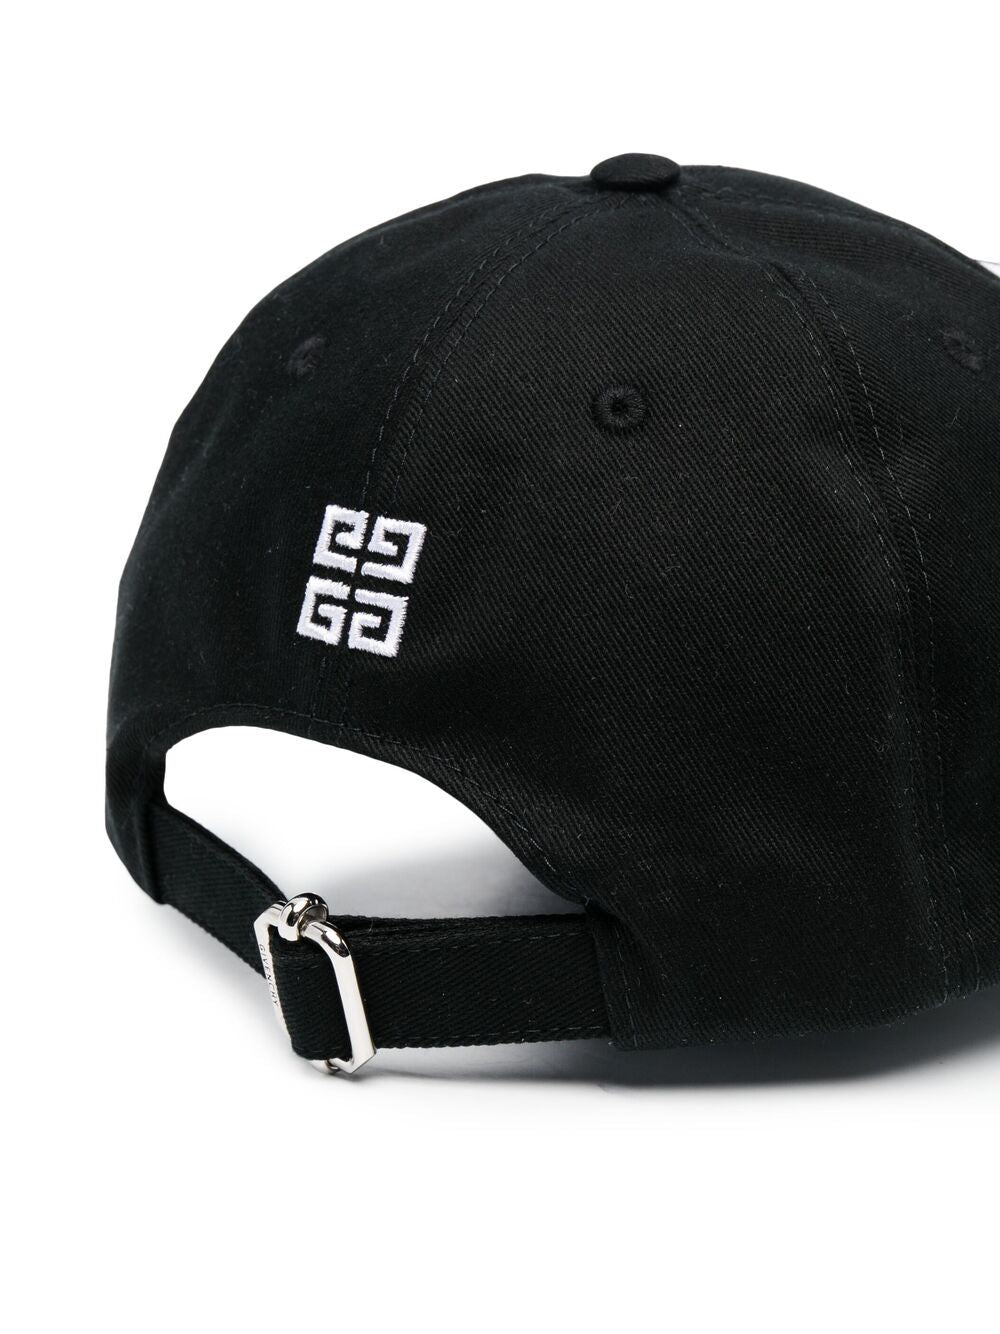 Givenchy Hats Black